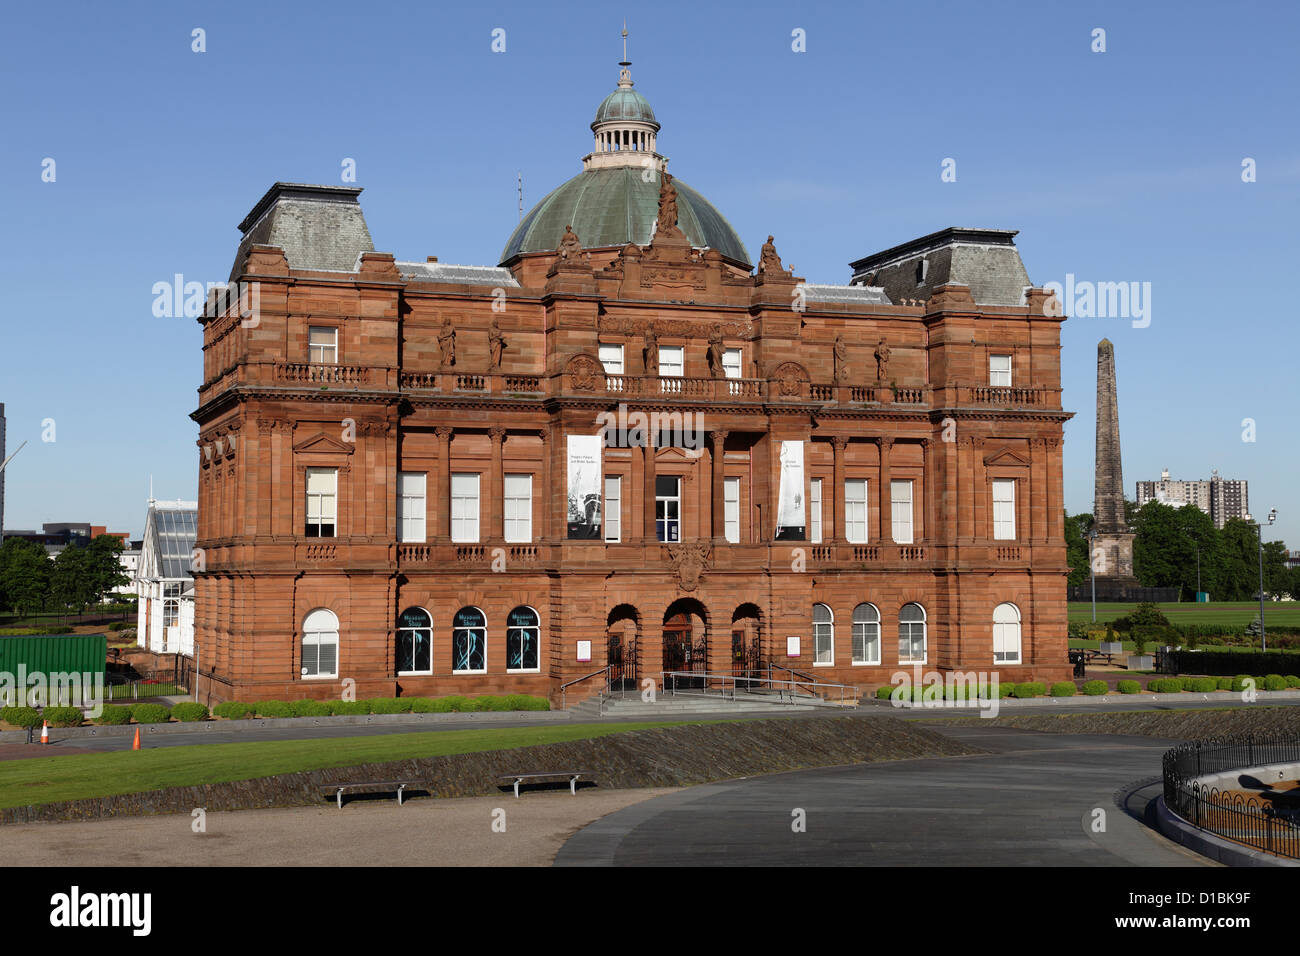 The People's Palace Museum on Glasgow Green, Glasgow, Scotland, UK Stock Photo